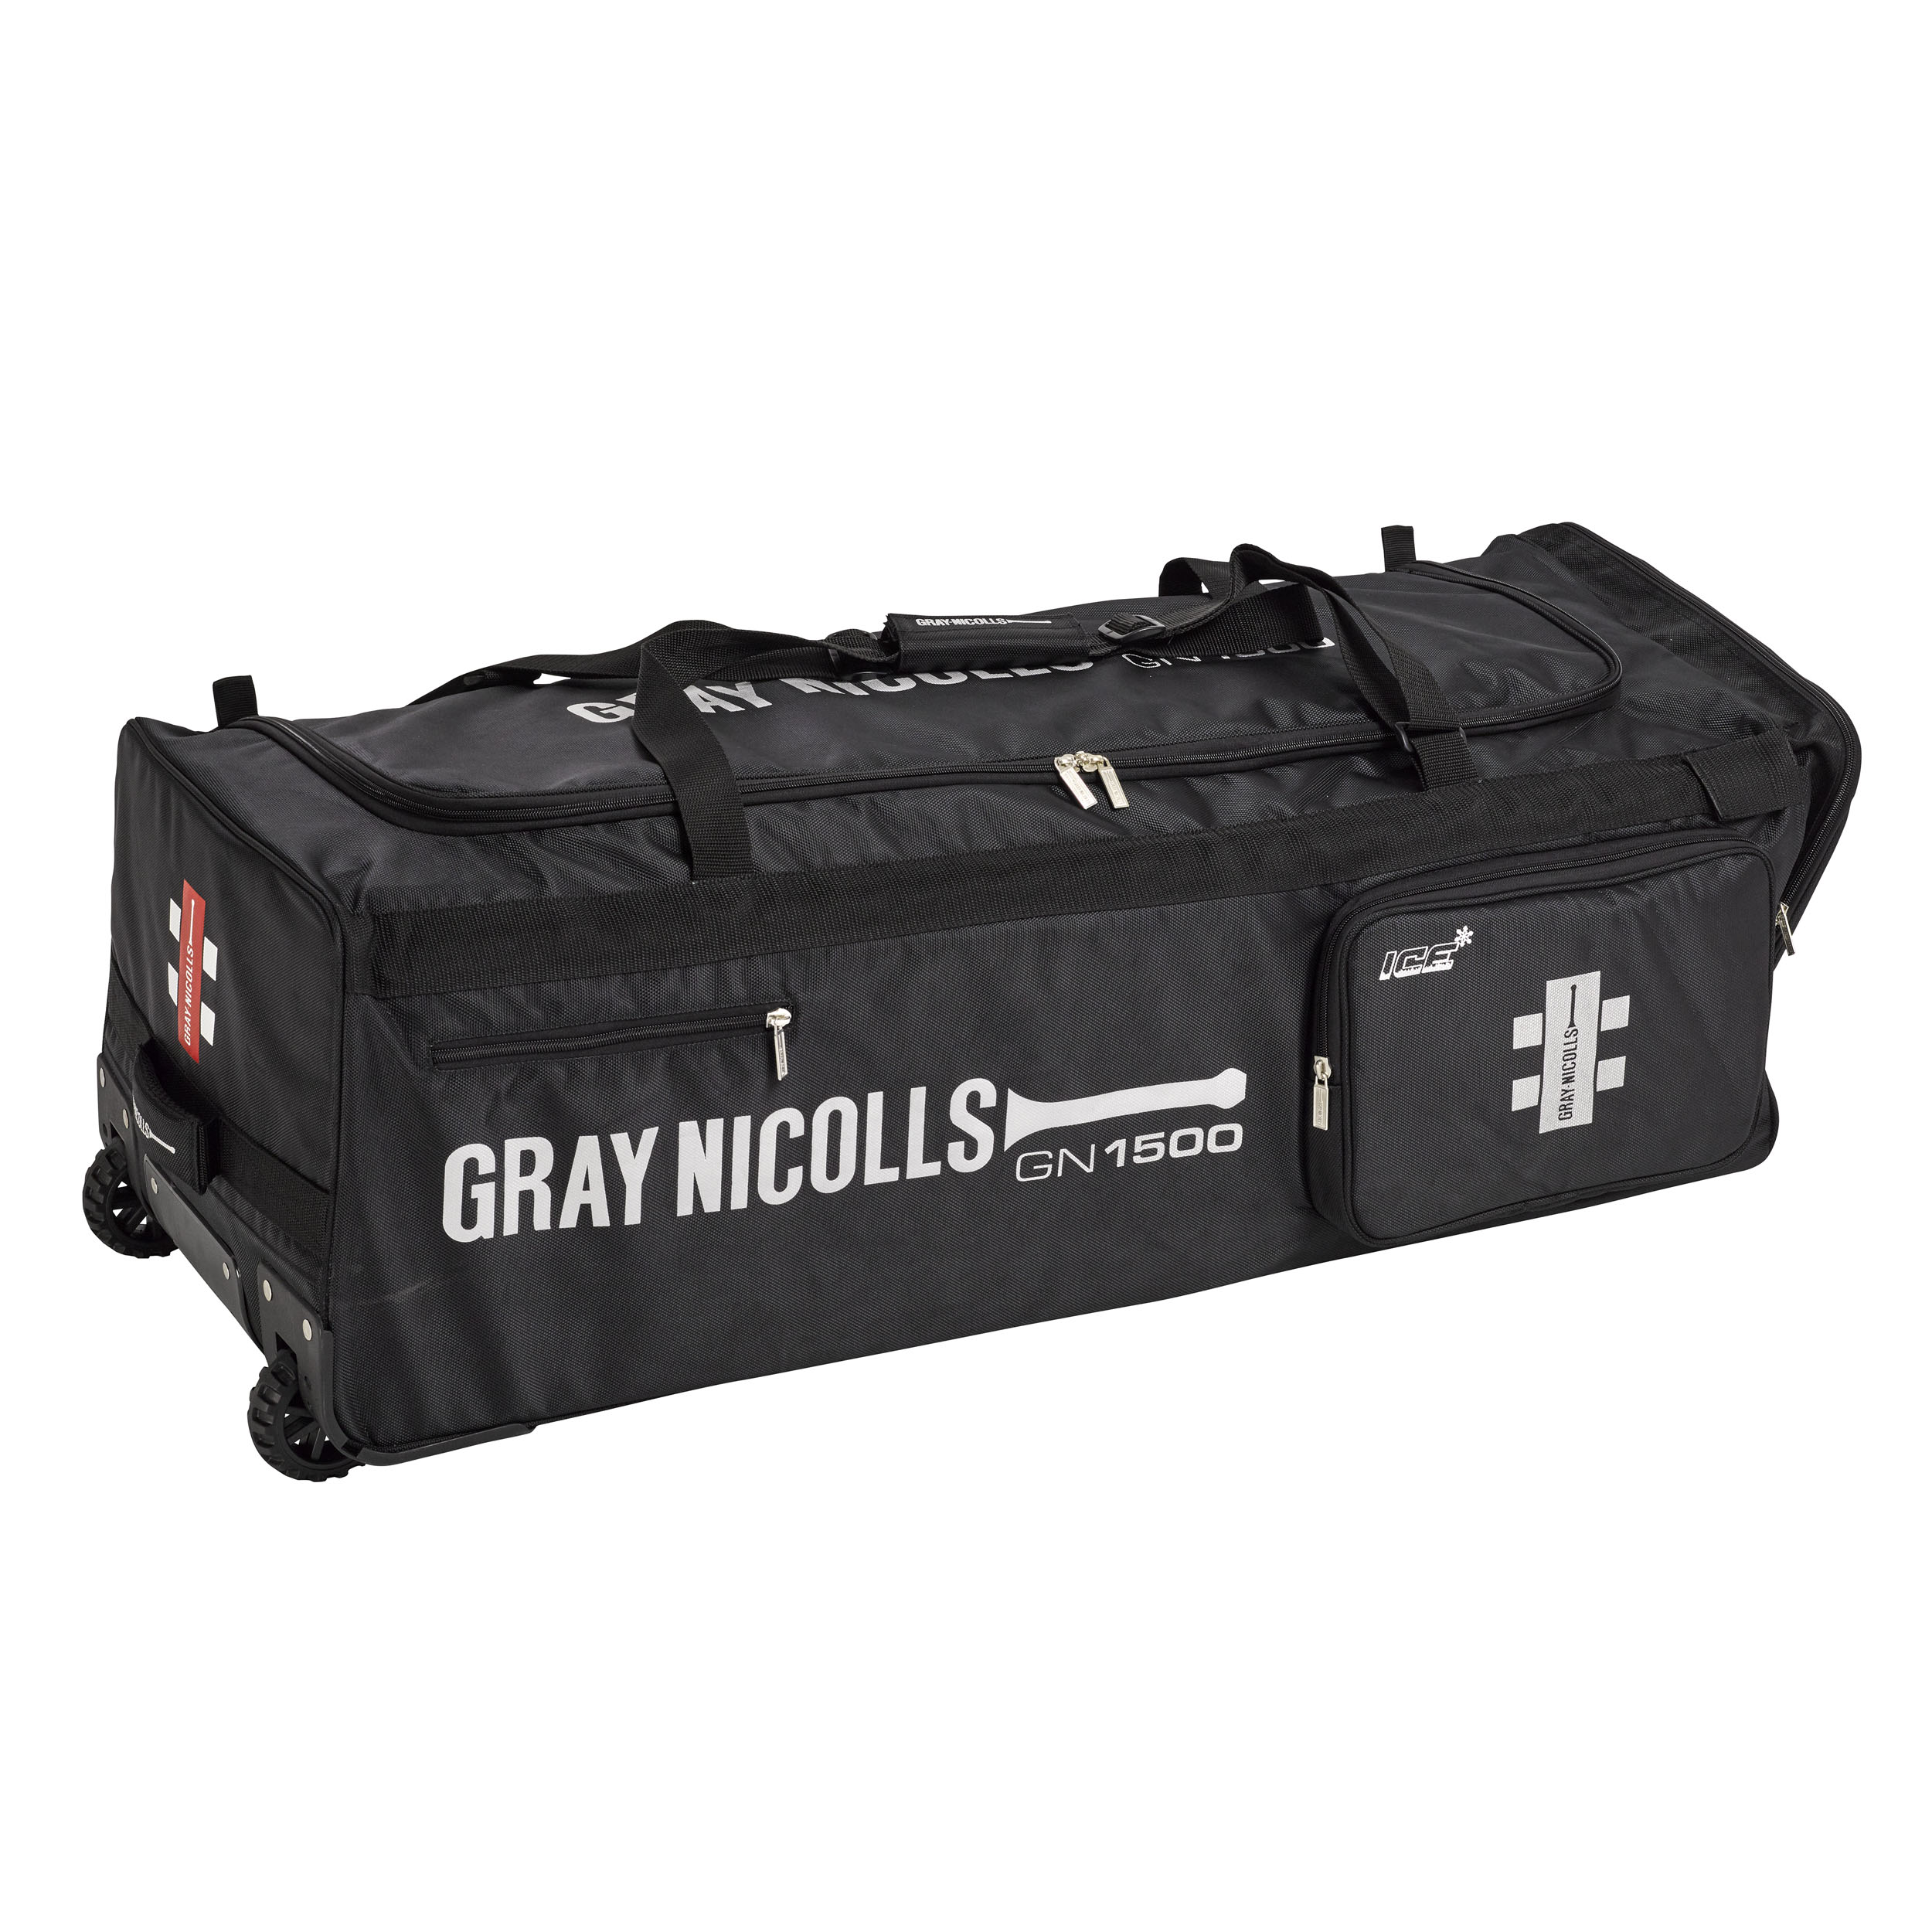 Gray Nicolls GN 1500 Wheel Bag – Black 21615